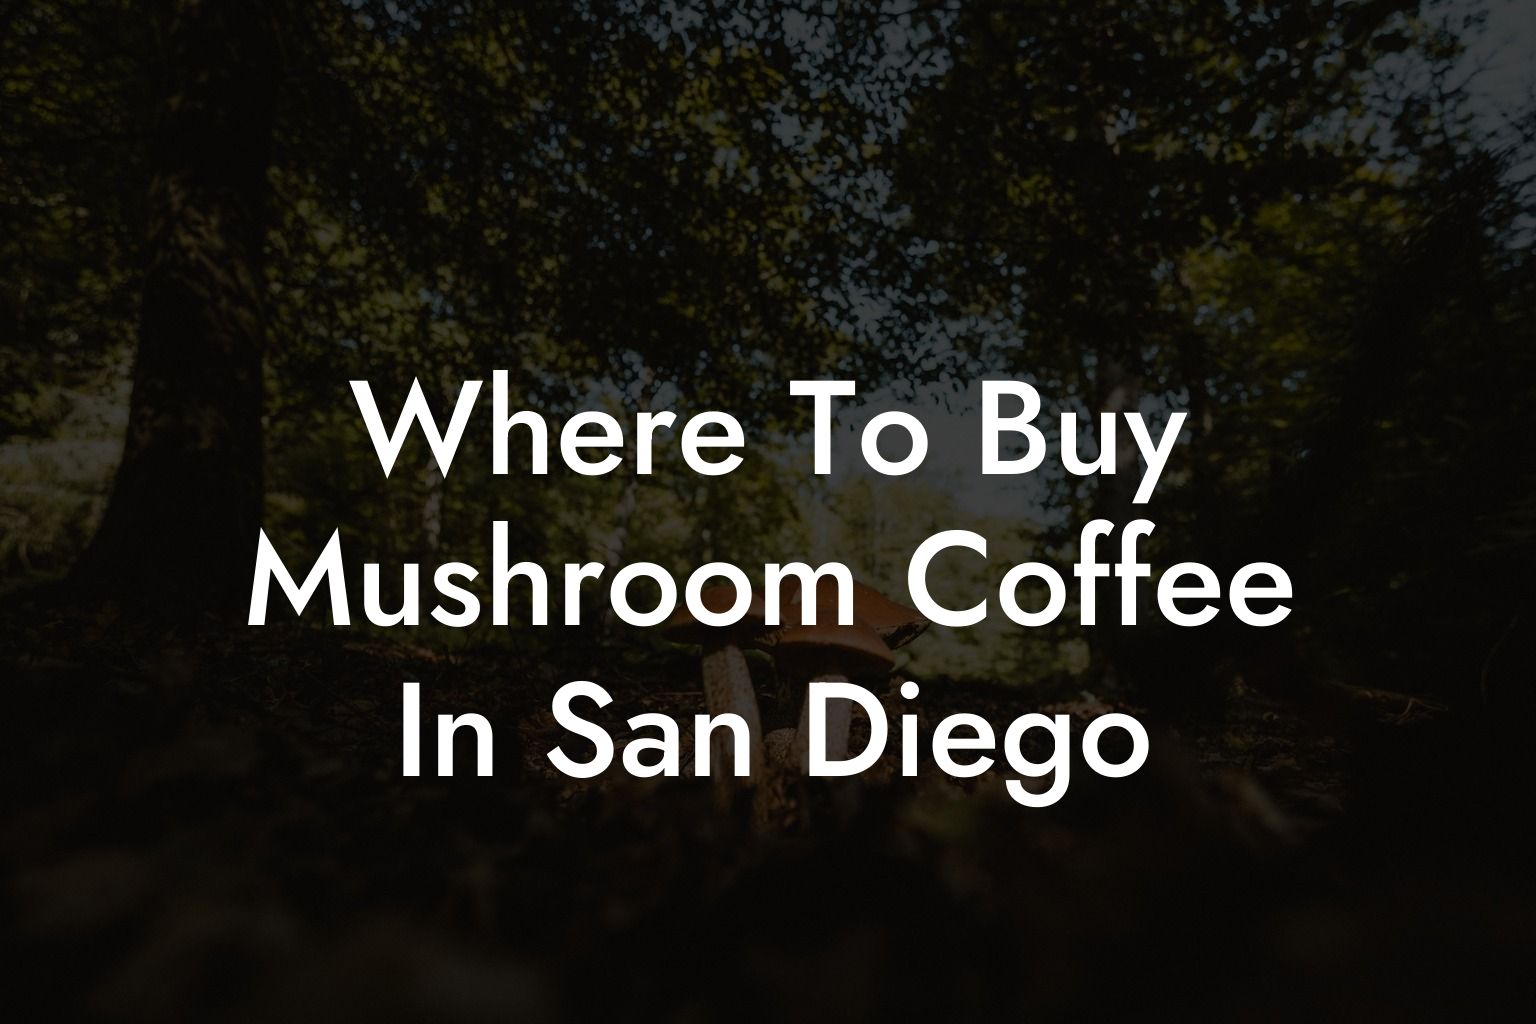 Where To Buy Mushroom Coffee In San Diego